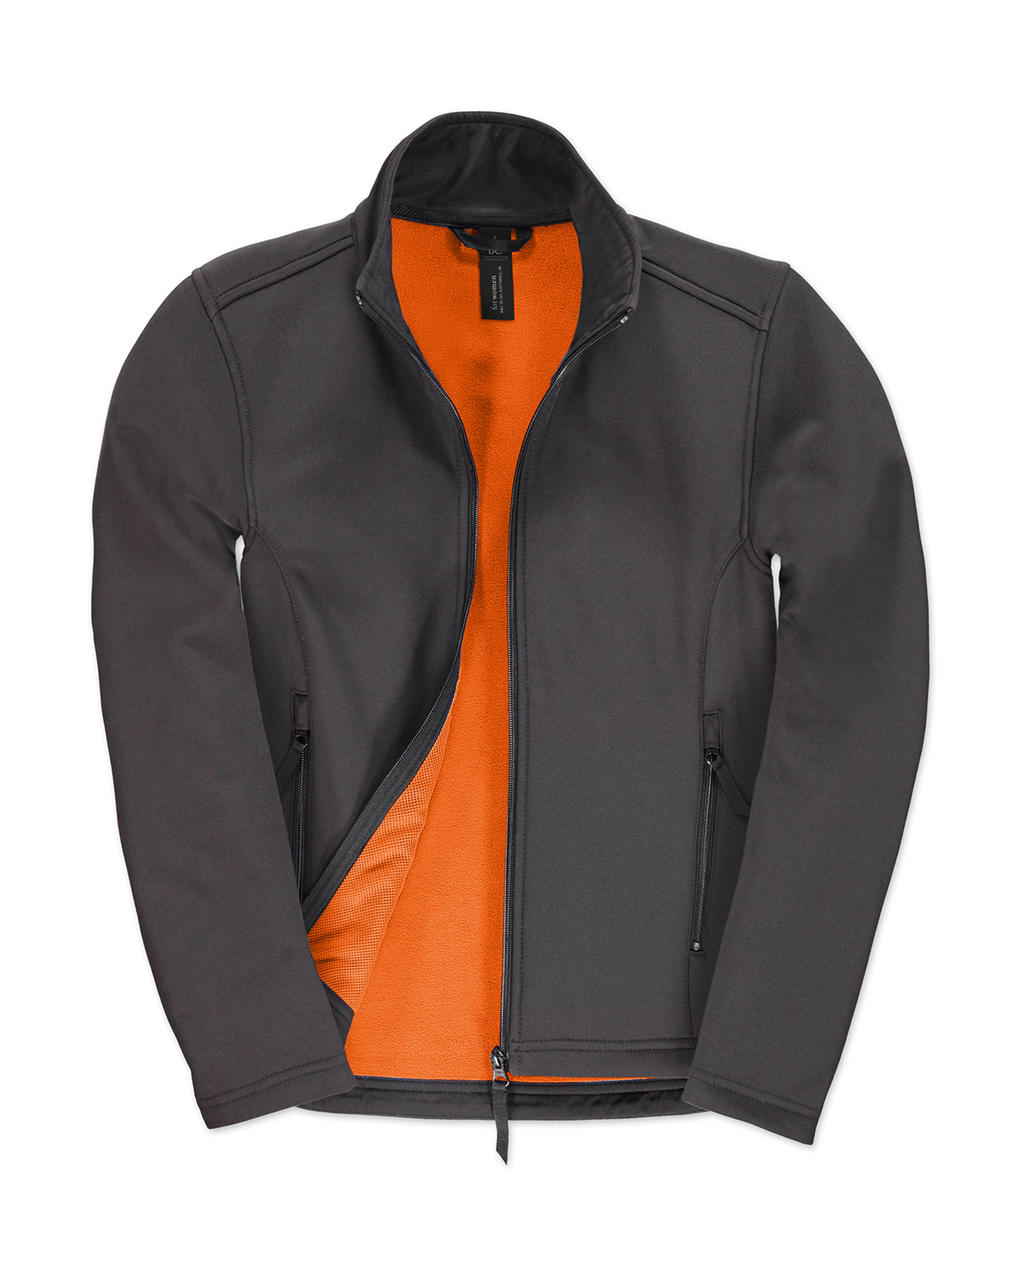  ID.701/women Softshell Jacket  in Farbe Dark Grey/Neon Orange